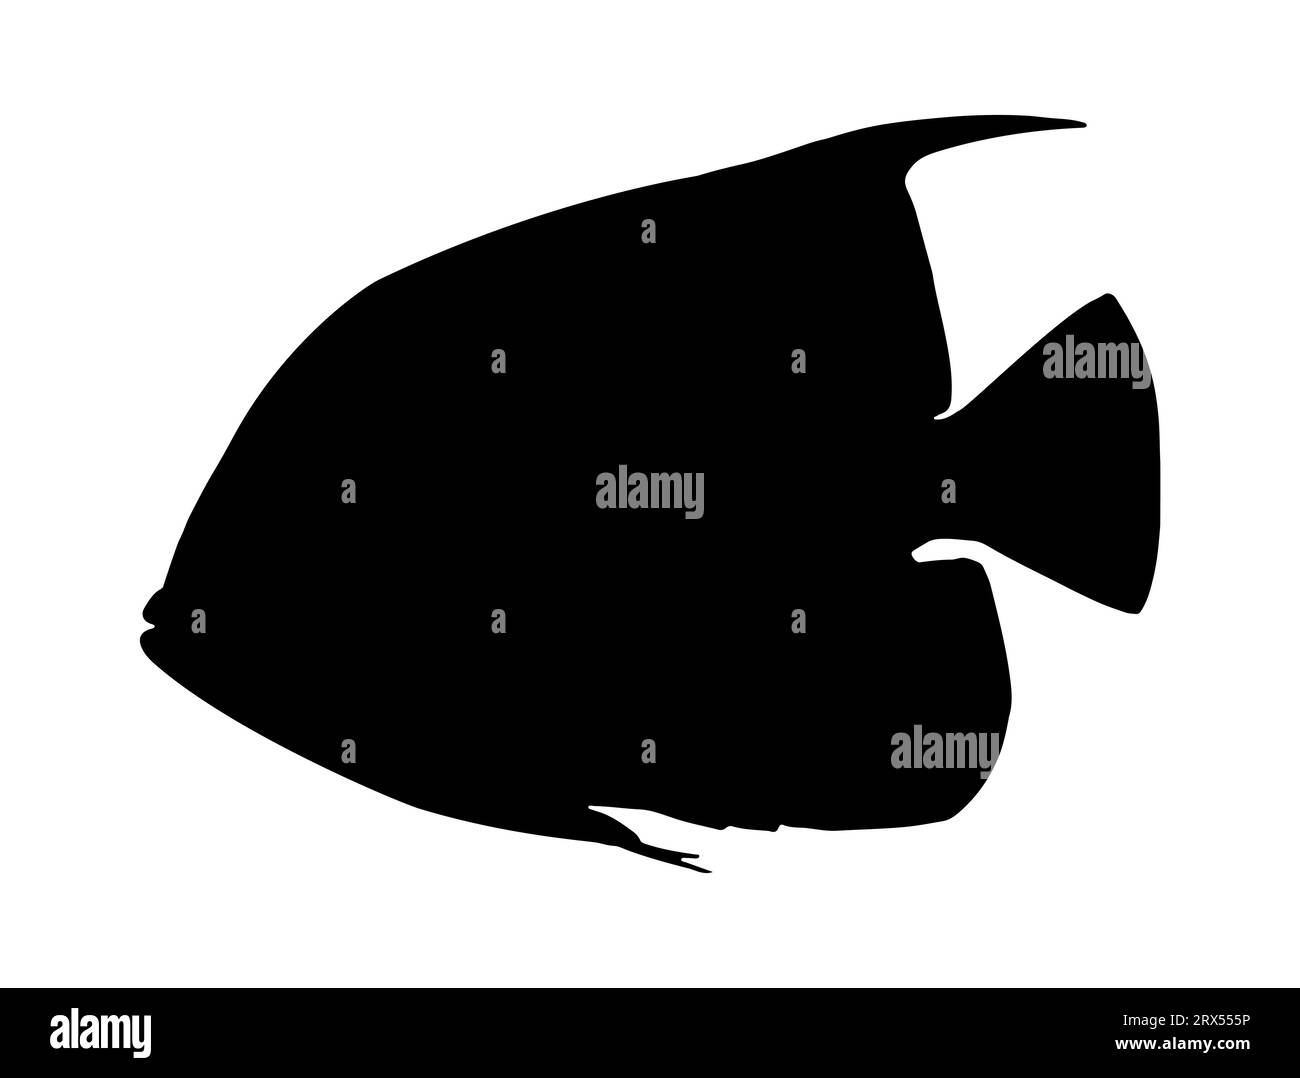 Fish silhouette vector art white background Stock Vector